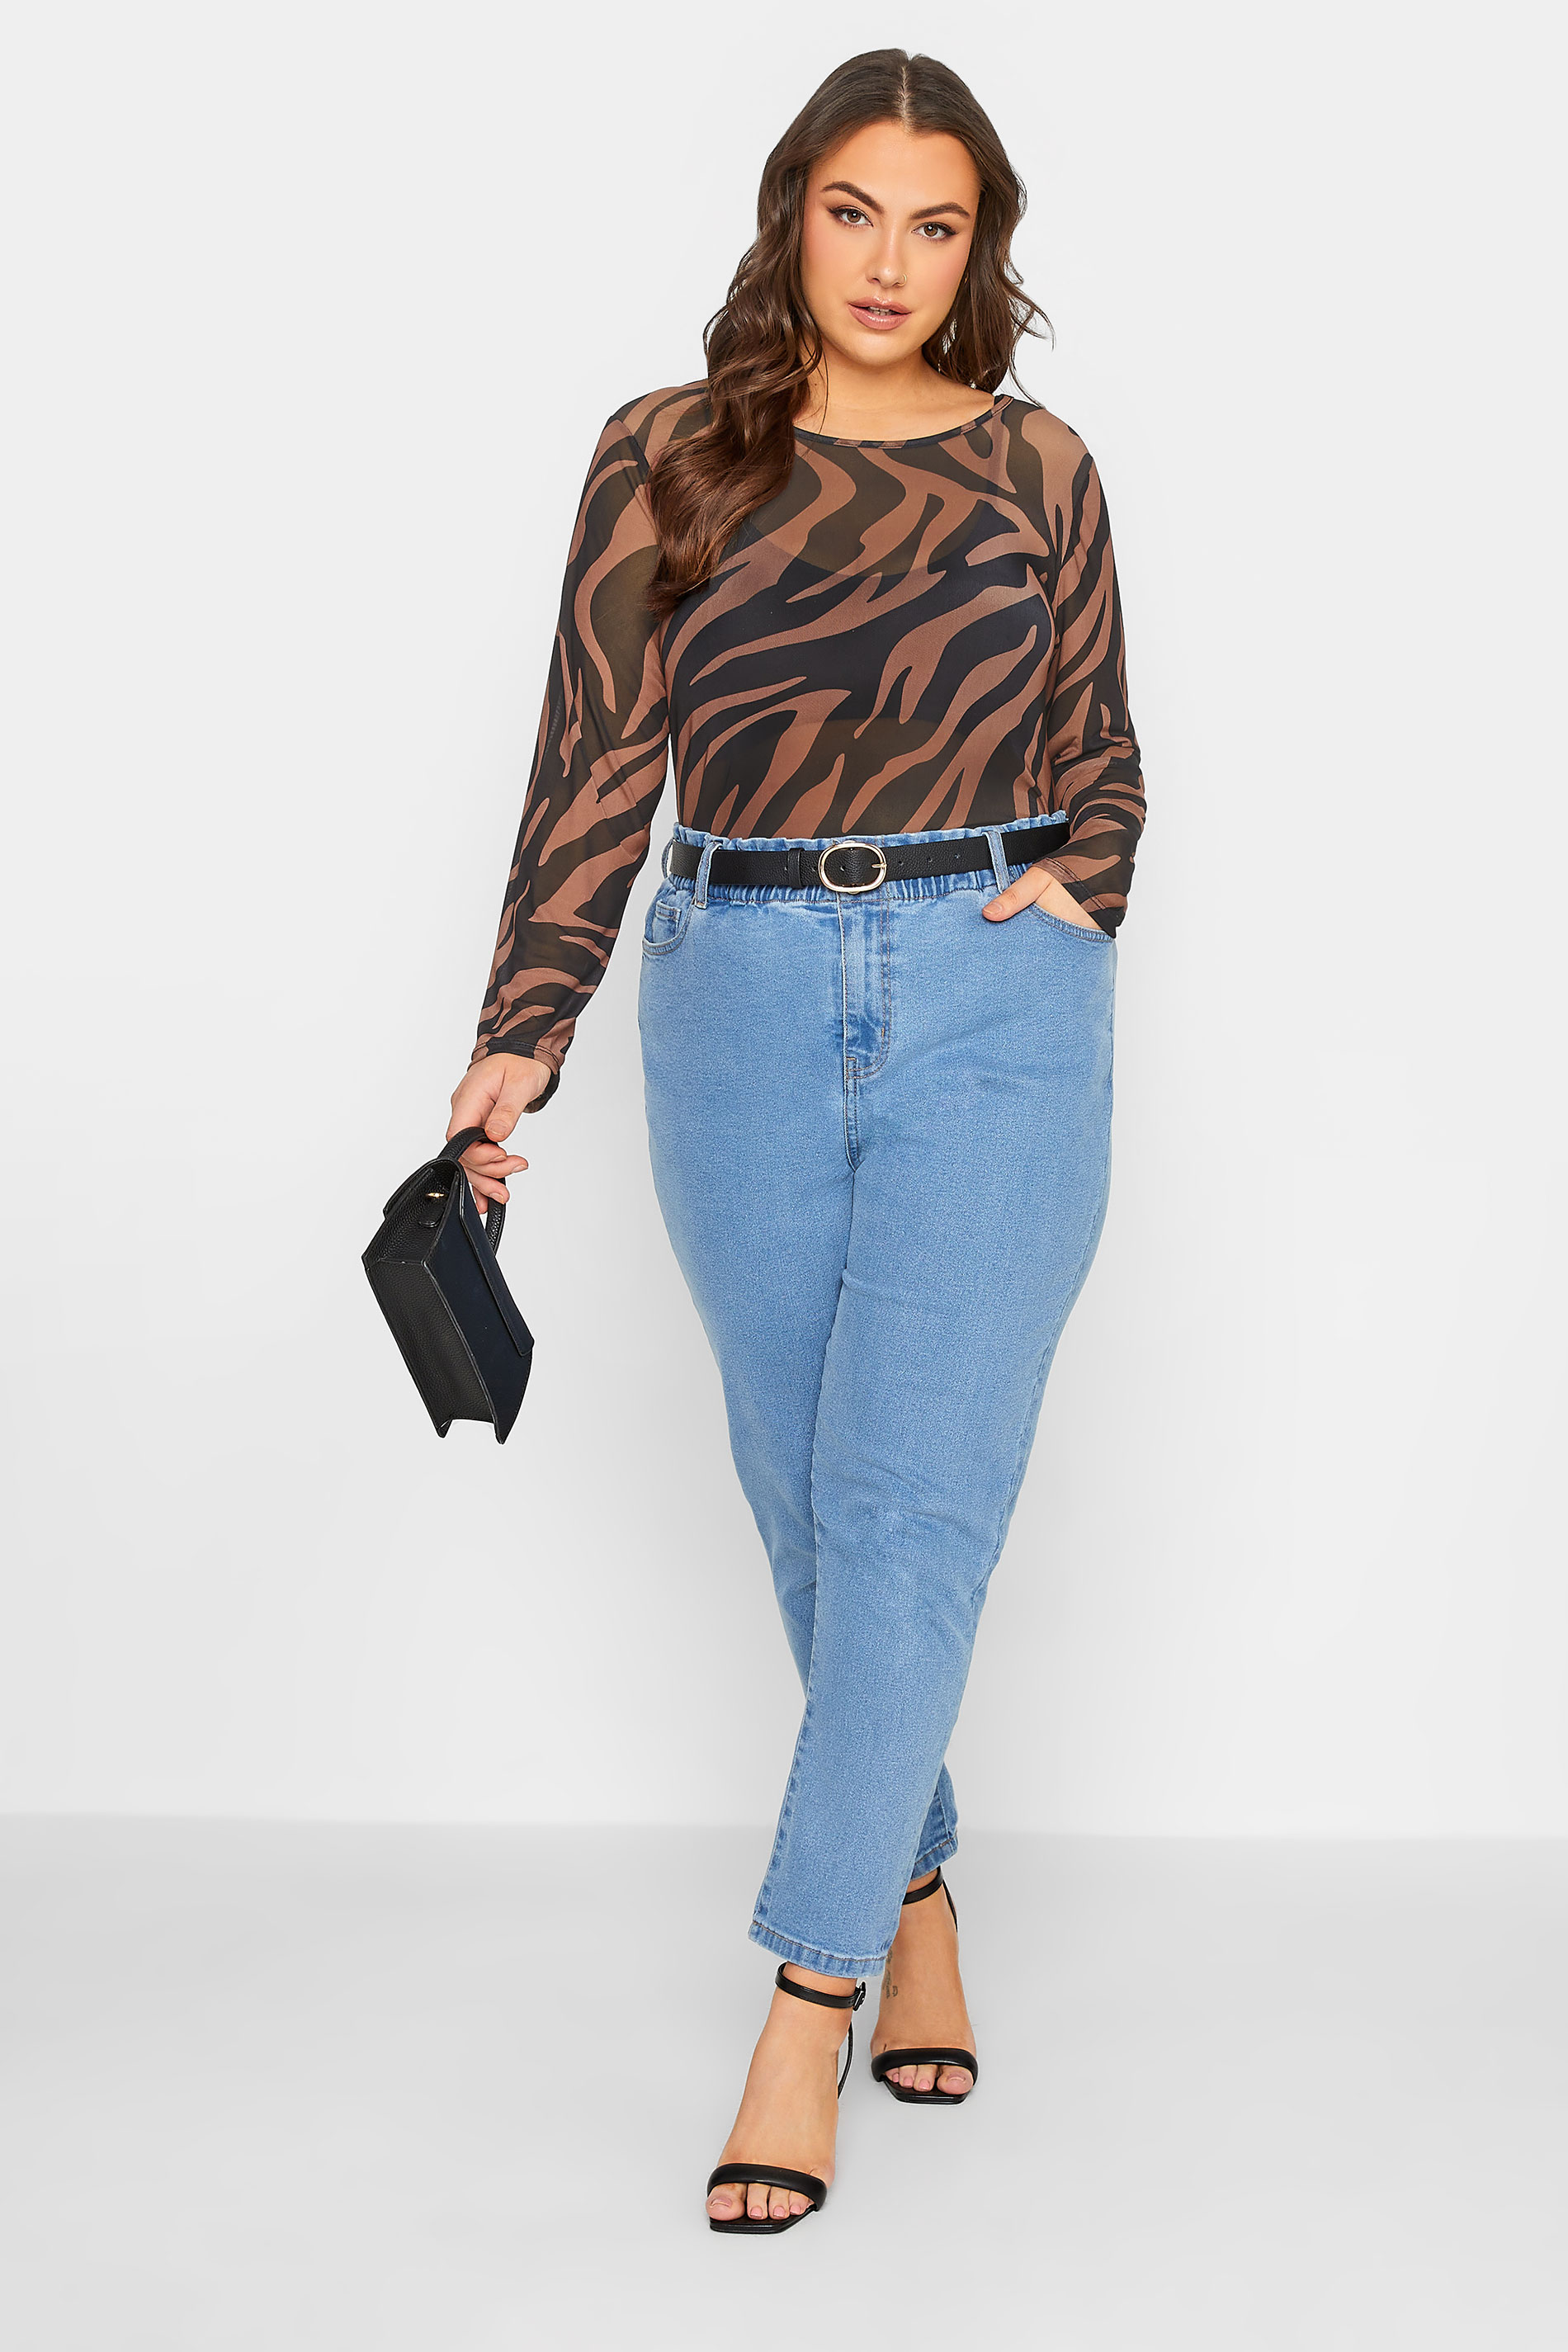 Plus Size Black & Brown Zebra Print Long Sleeve Mesh Top | Yours Clothing 2